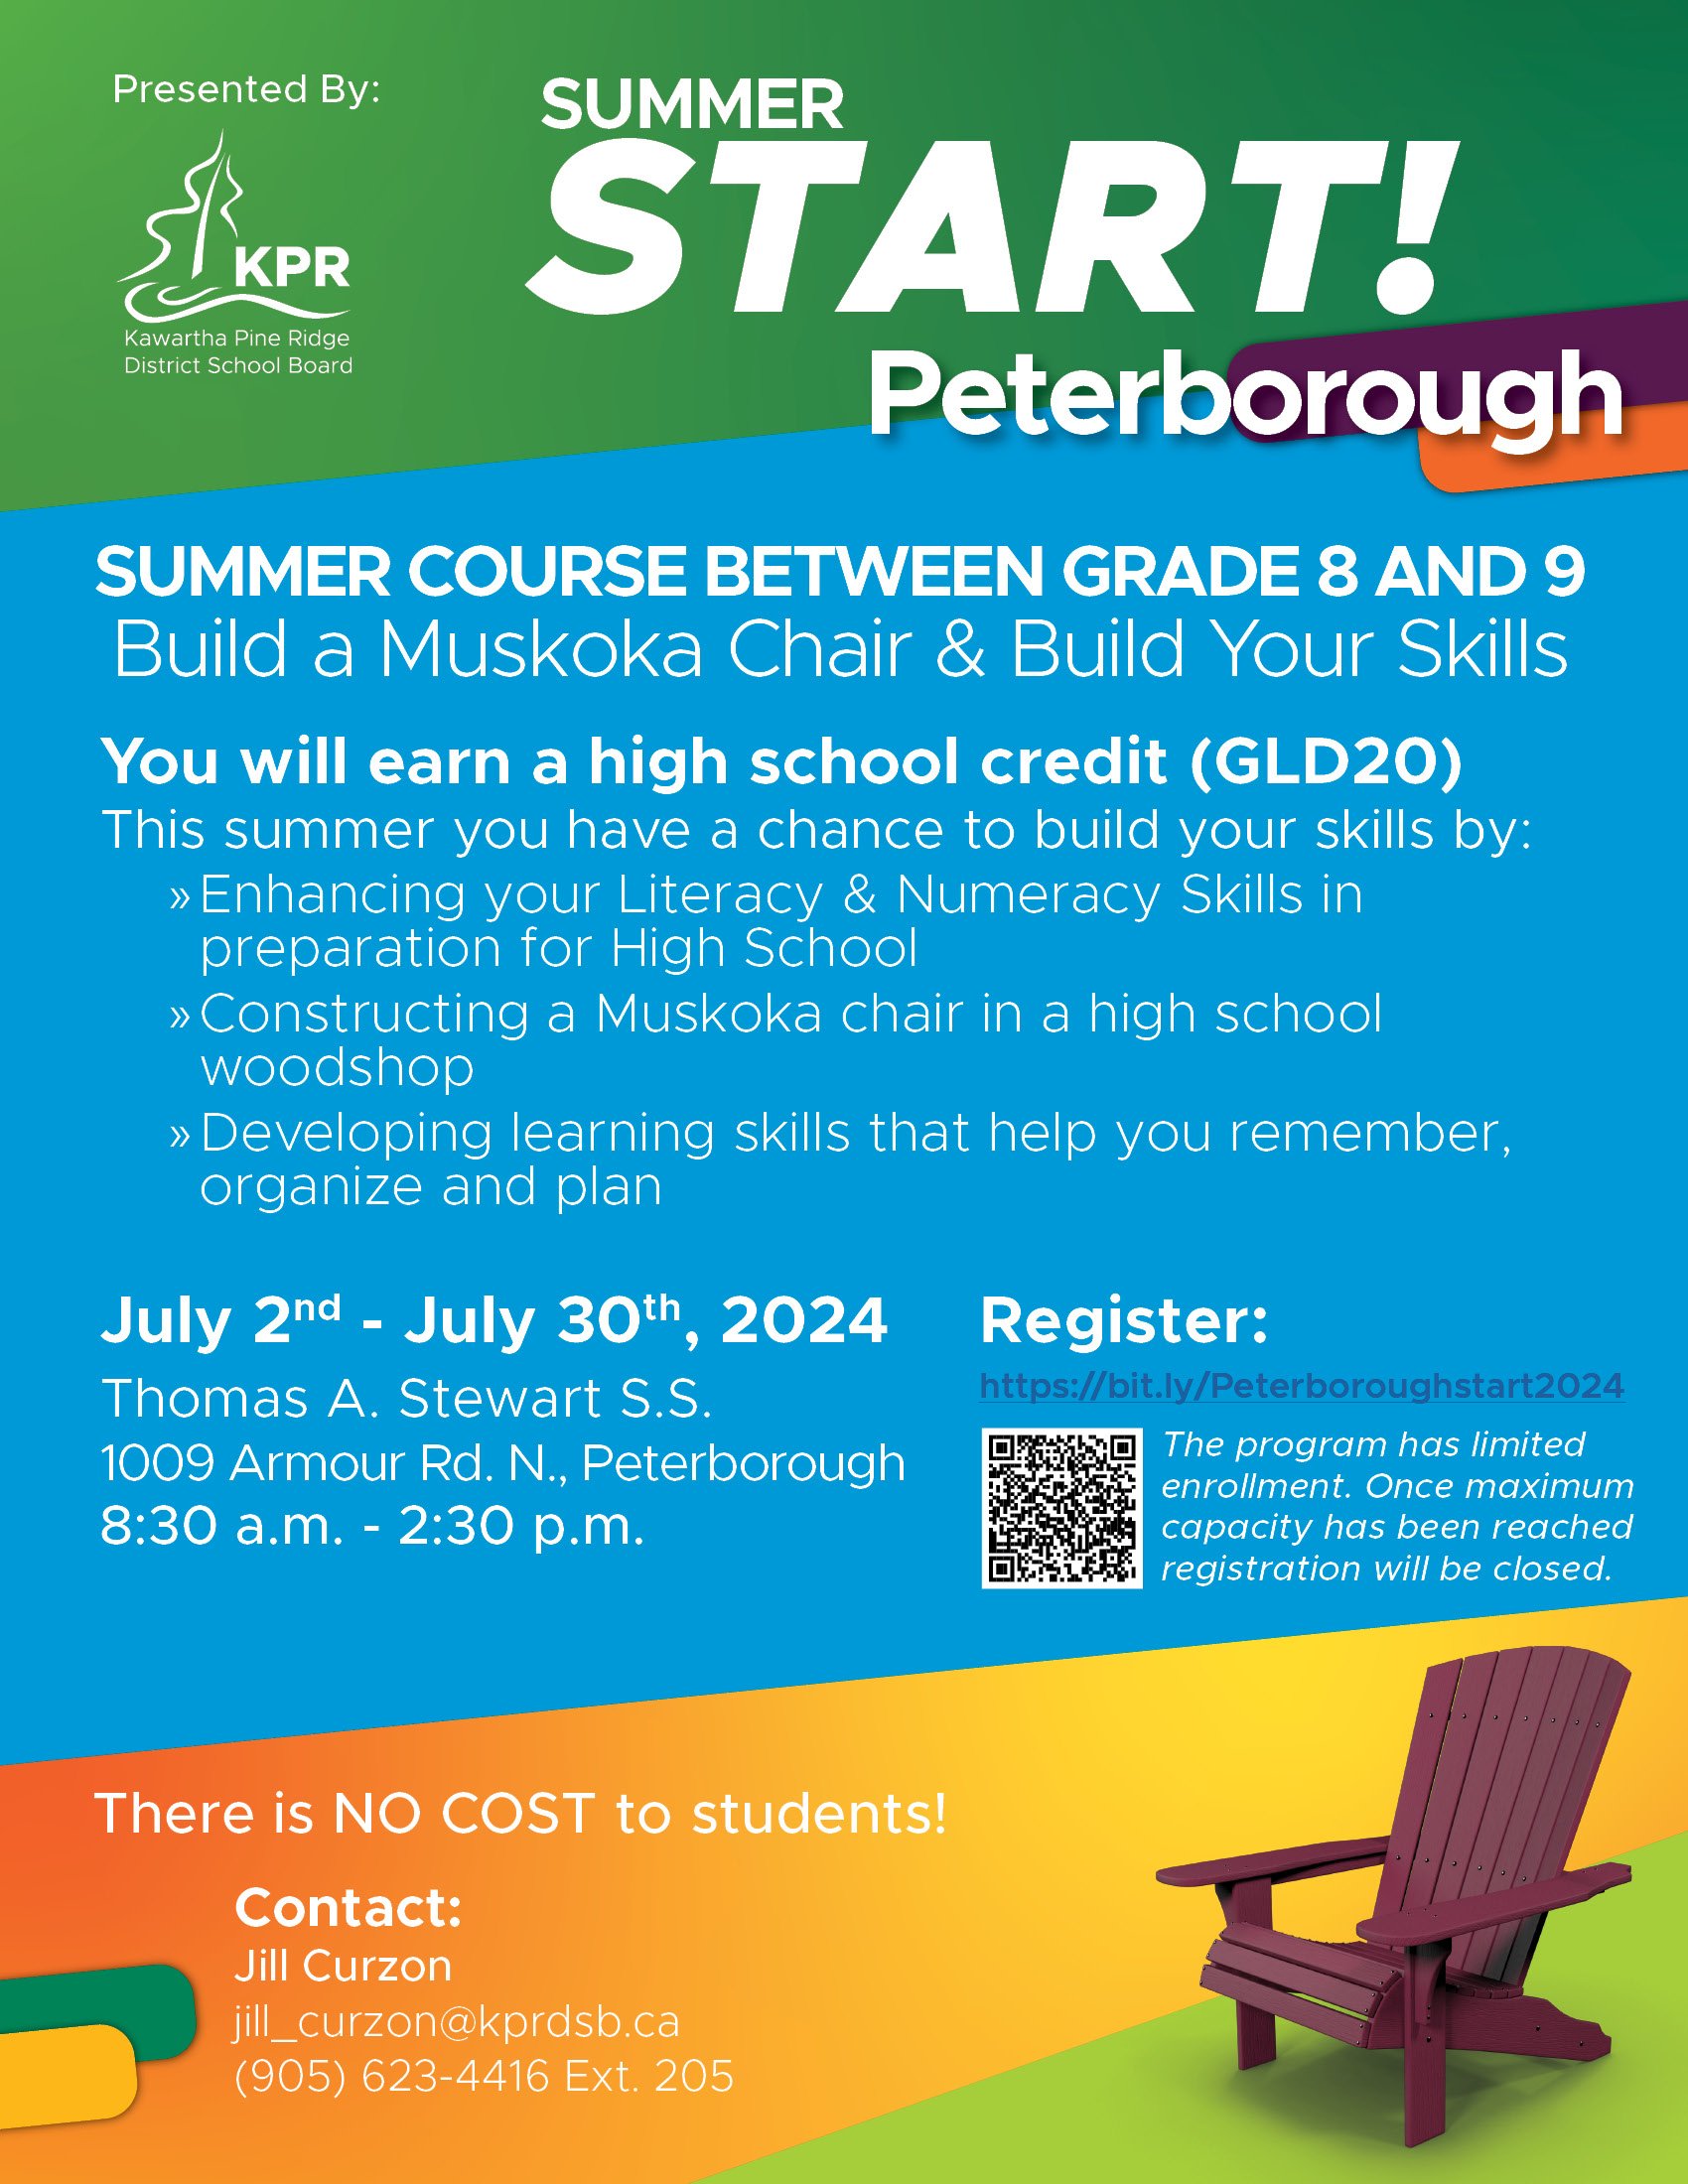 Summer School Poster for Peterborough